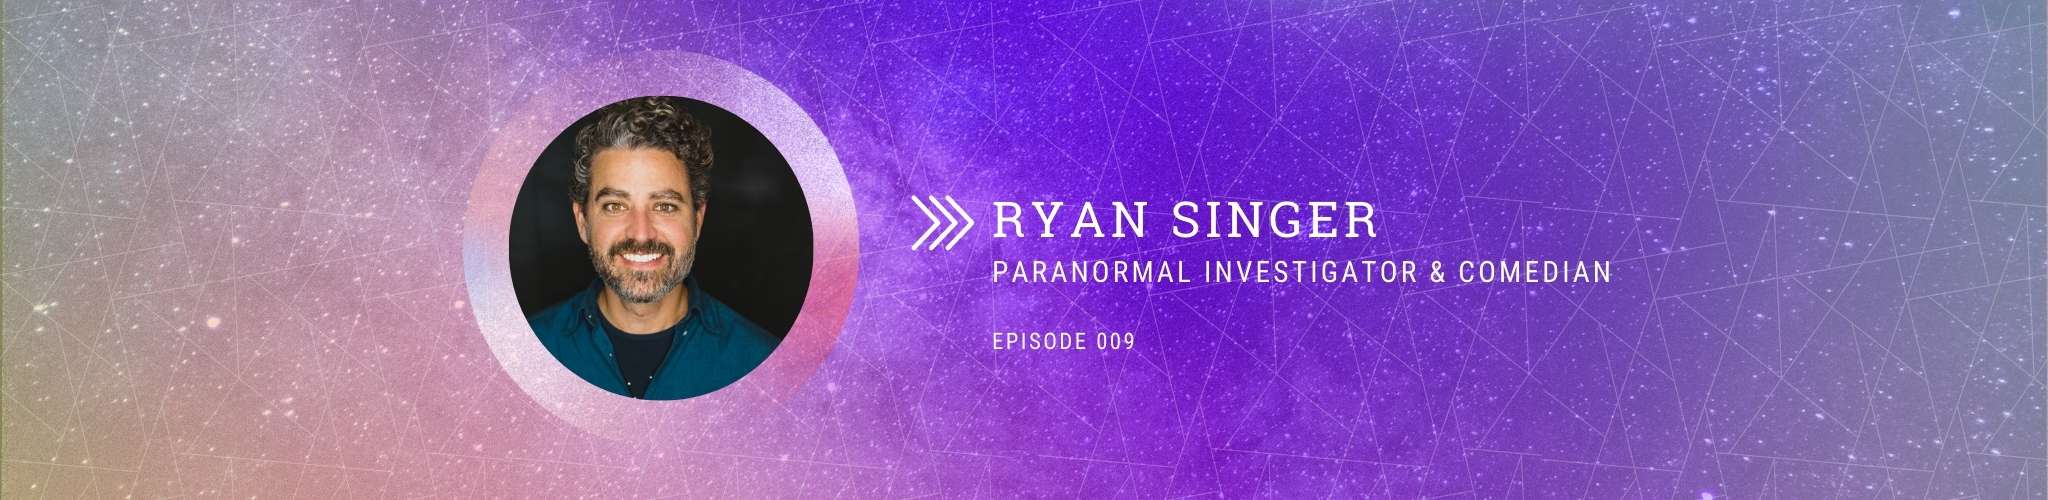 09 Ryan Singer Paranormal Investigator and Comedian